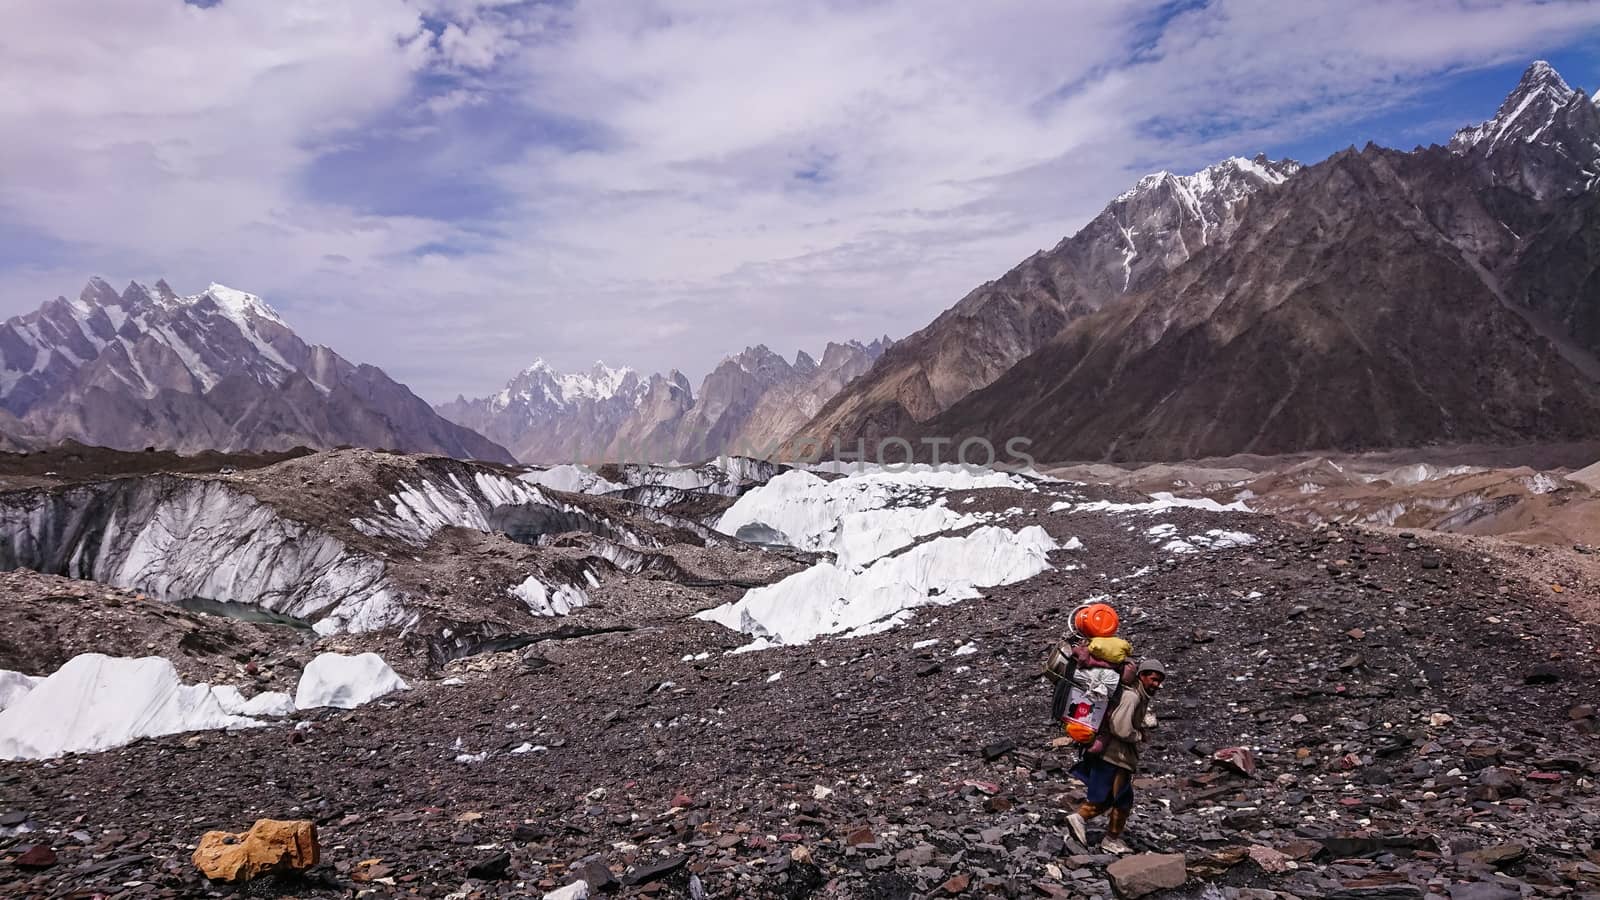 K2 and Broad Peak from Concordia in the Karakorum Mountains Pakistan